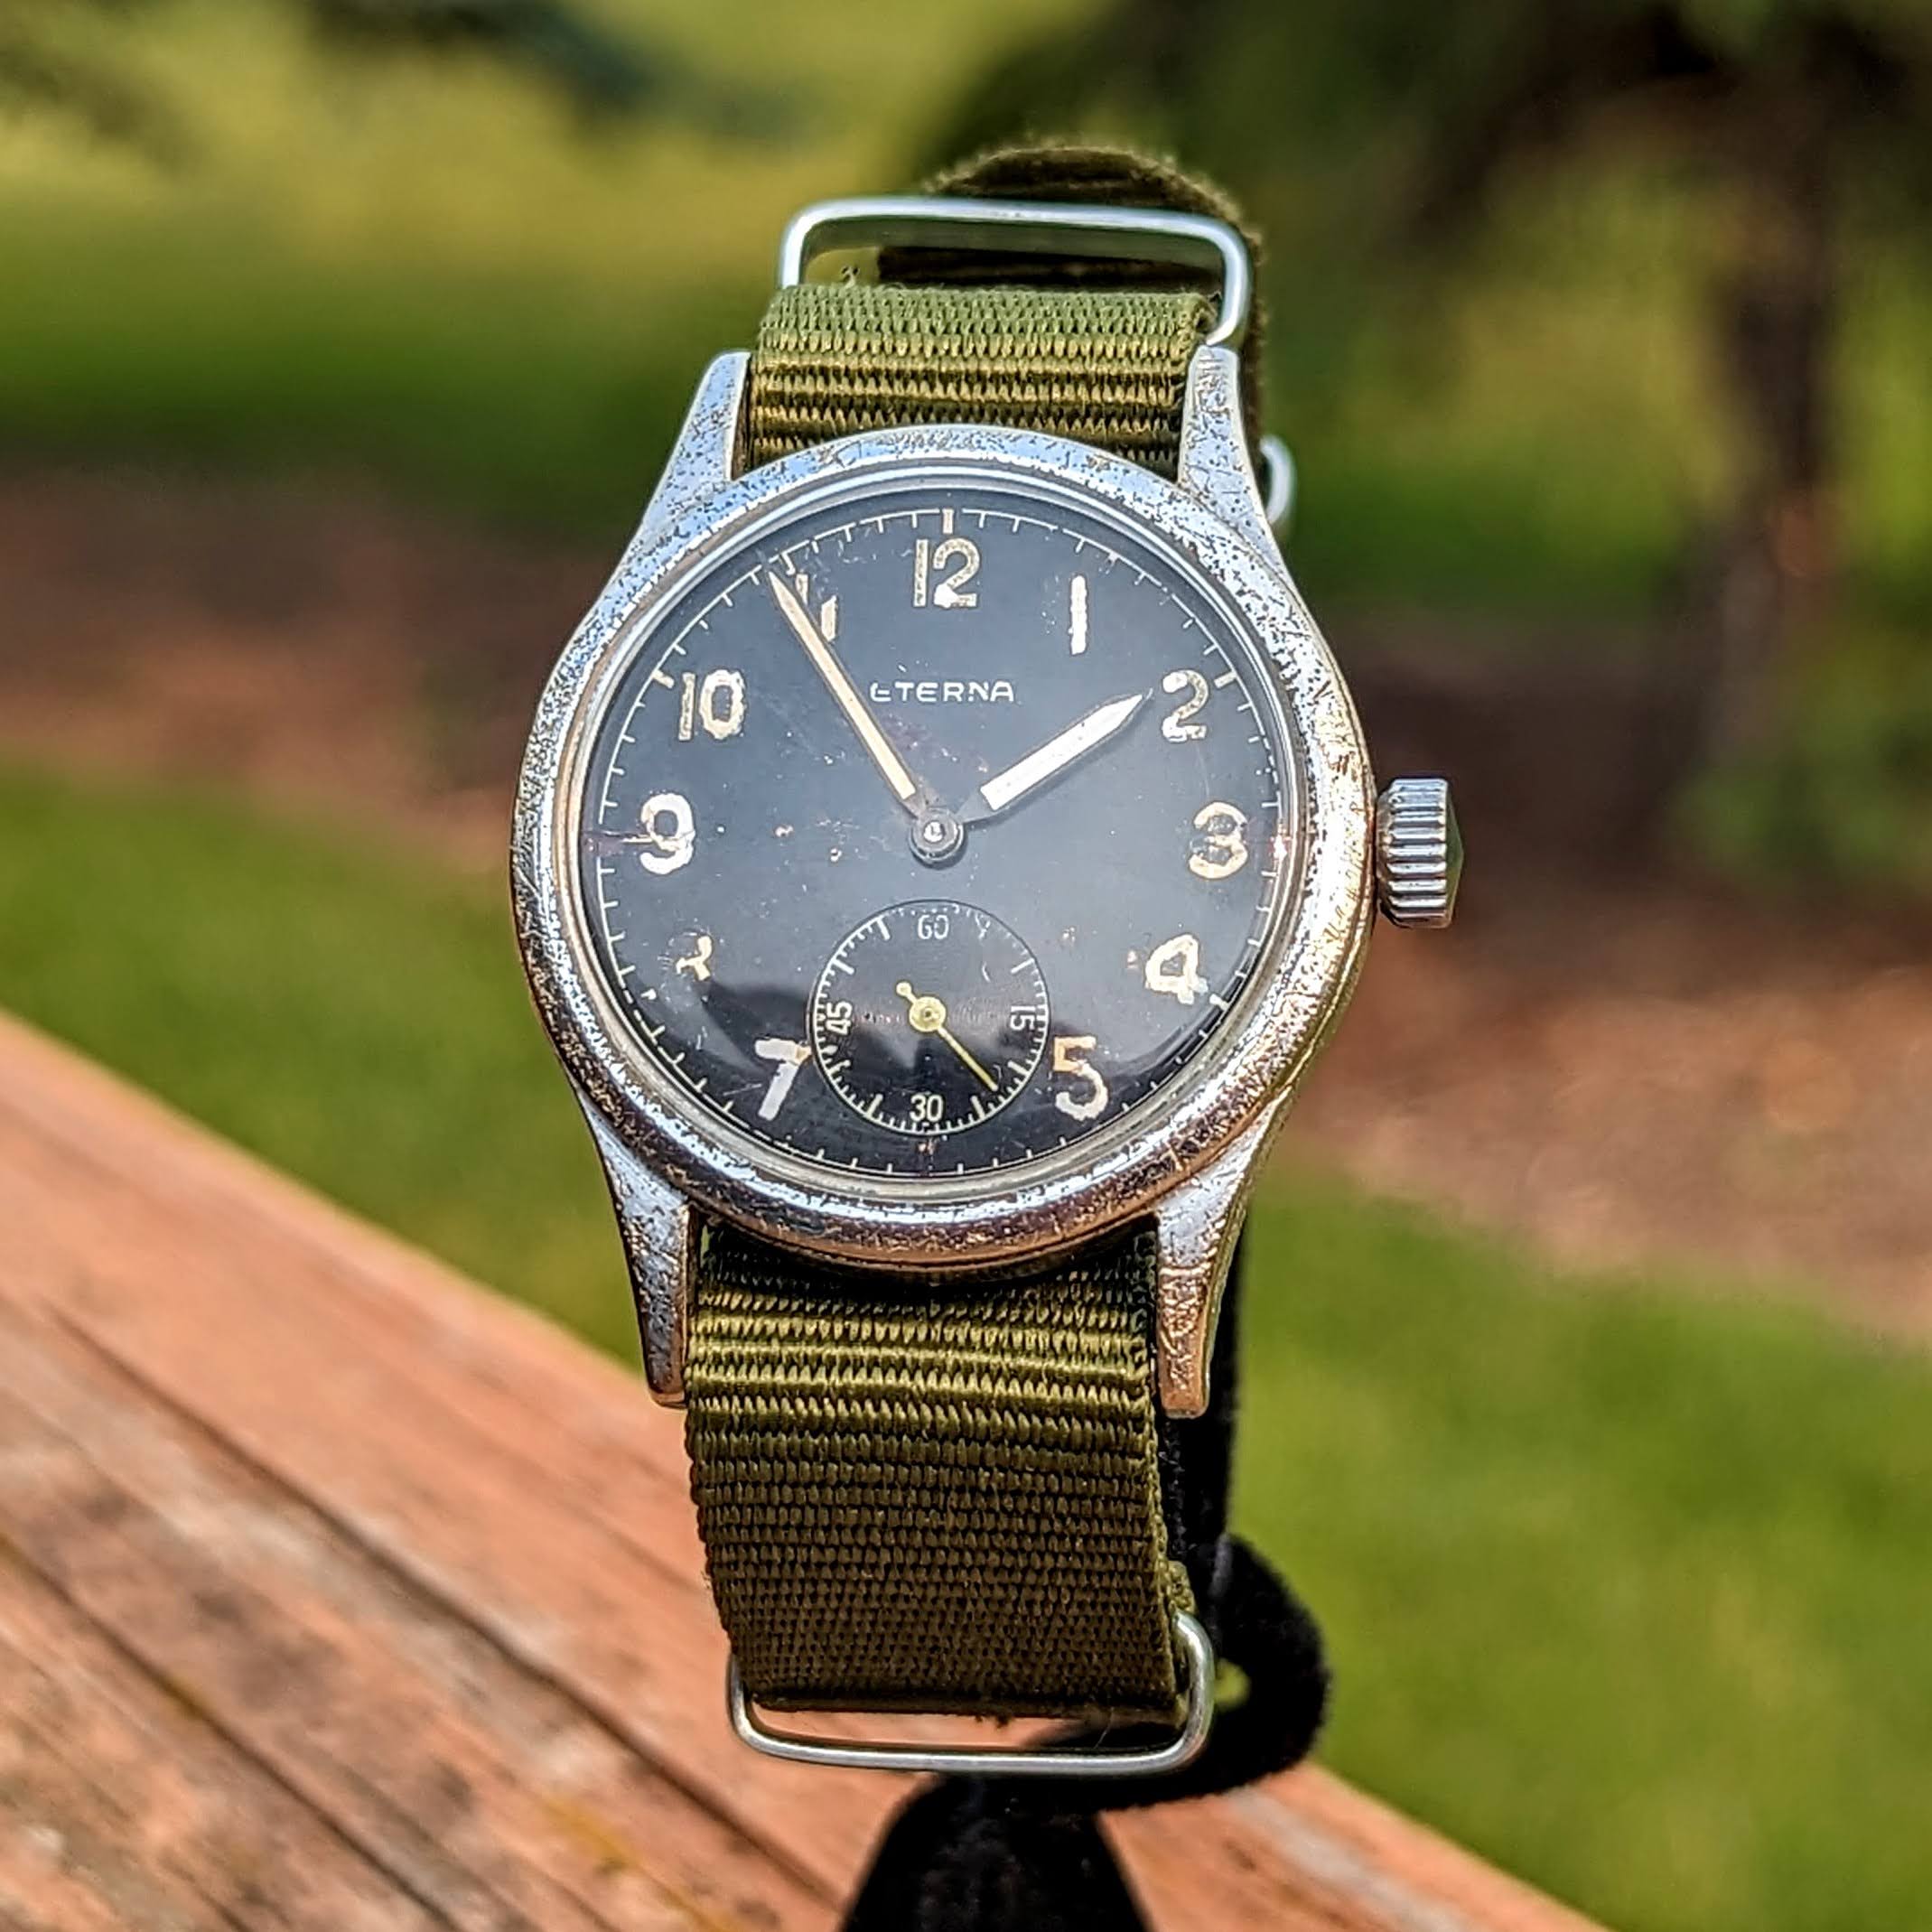 1944 ETERNA WWII Military Wristwatch 15 Jewels Cal. 520H Vintage Watch